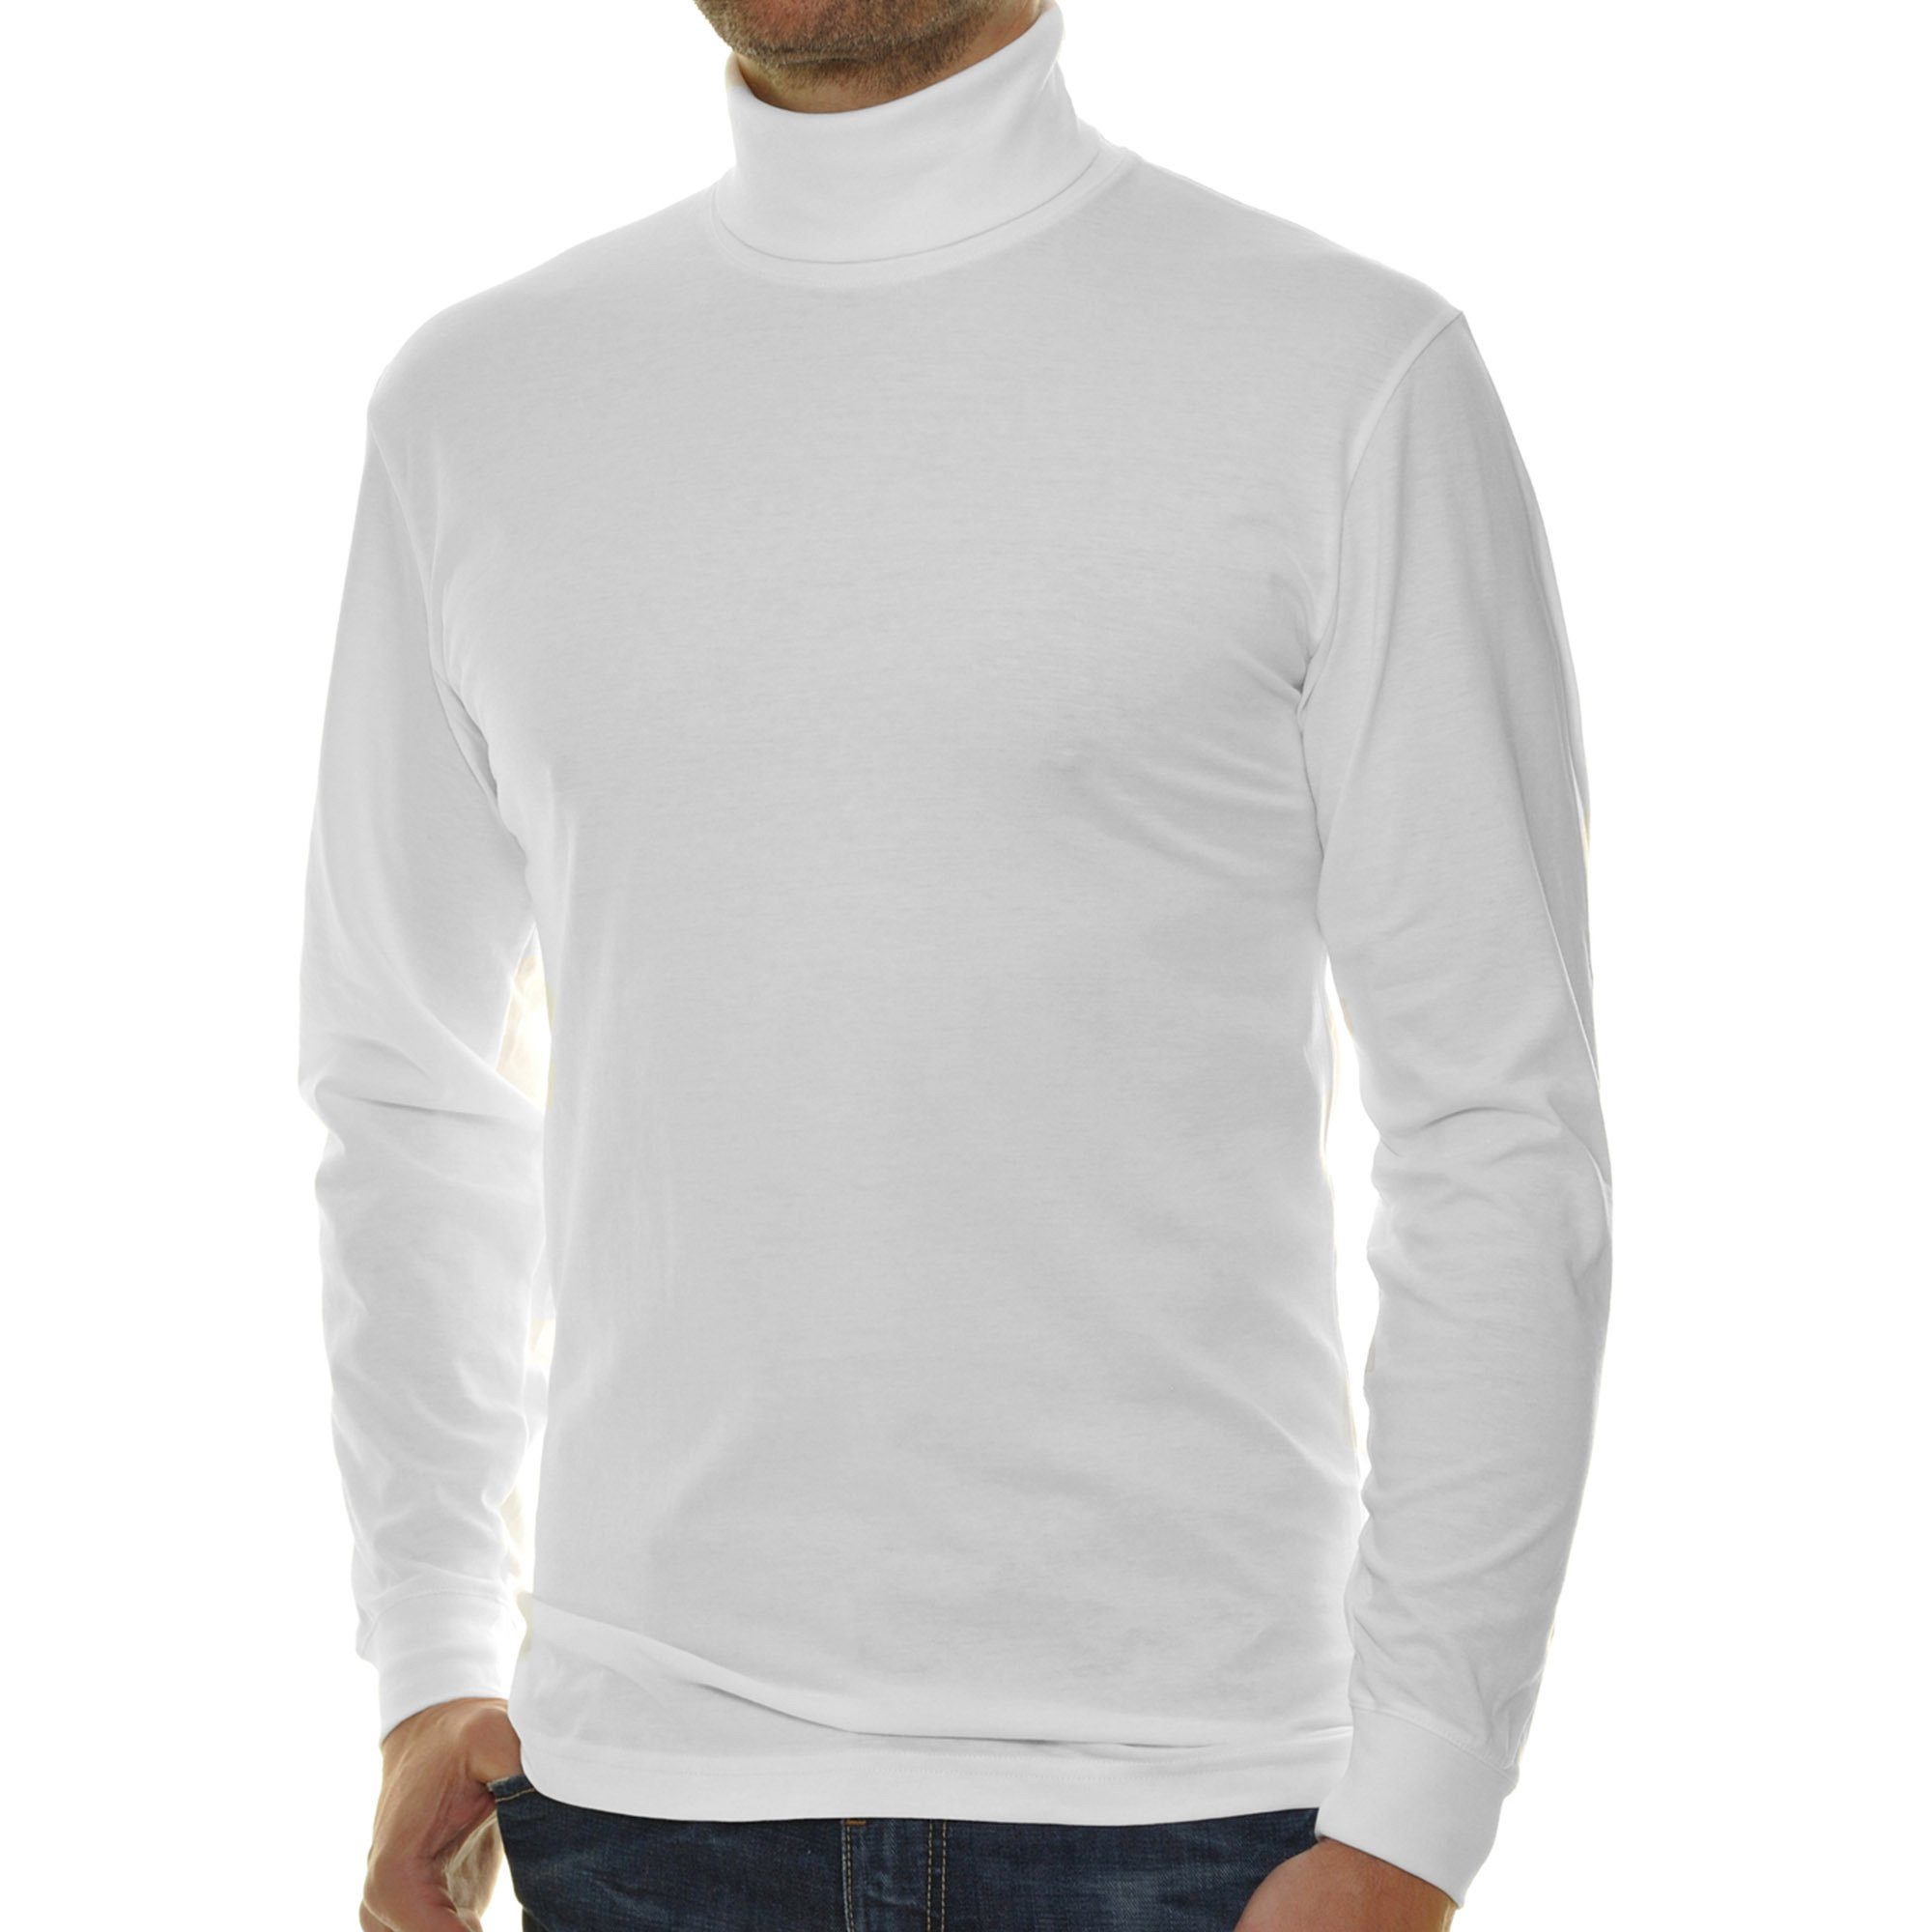 Sweatshirt Weiß Rollkragenpullover Herren - RAGMAN Basic Langarm